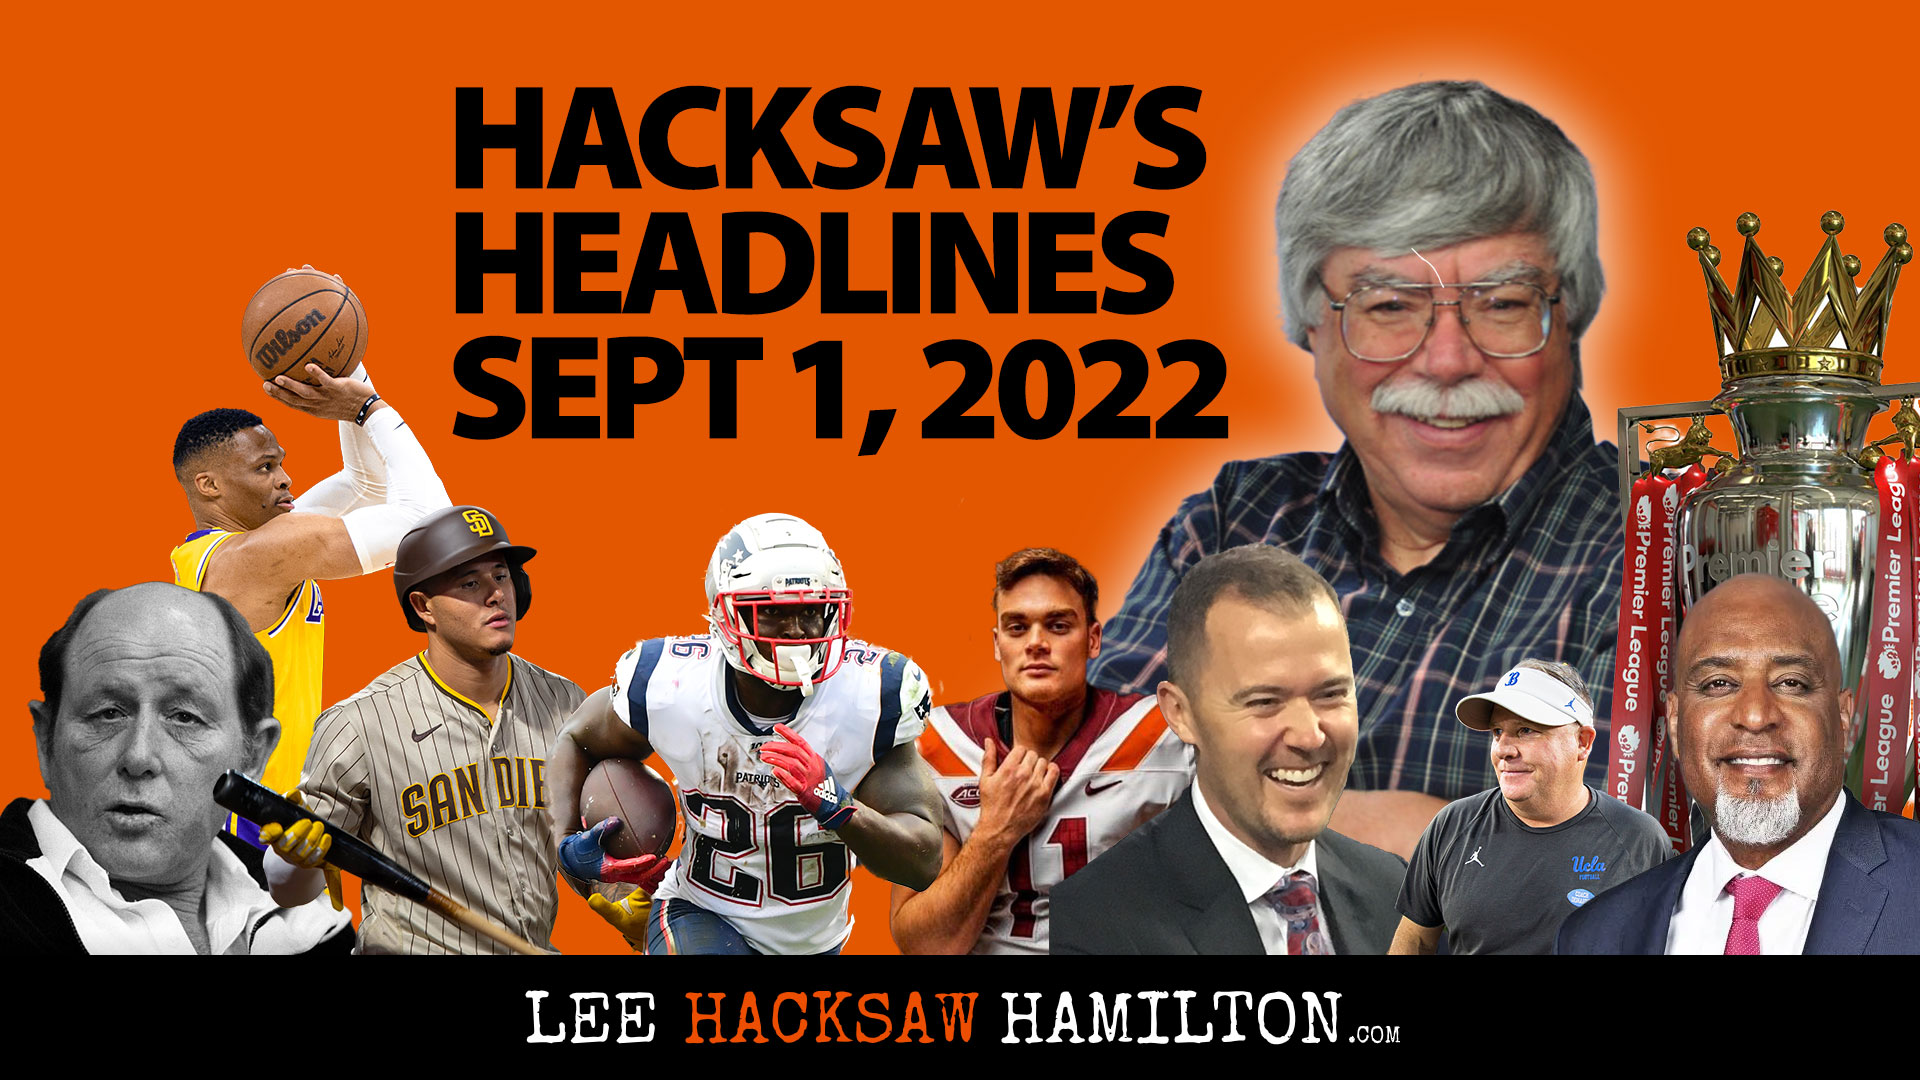 Hacksaw's Headlines, Lee Hacksaw Hamilton